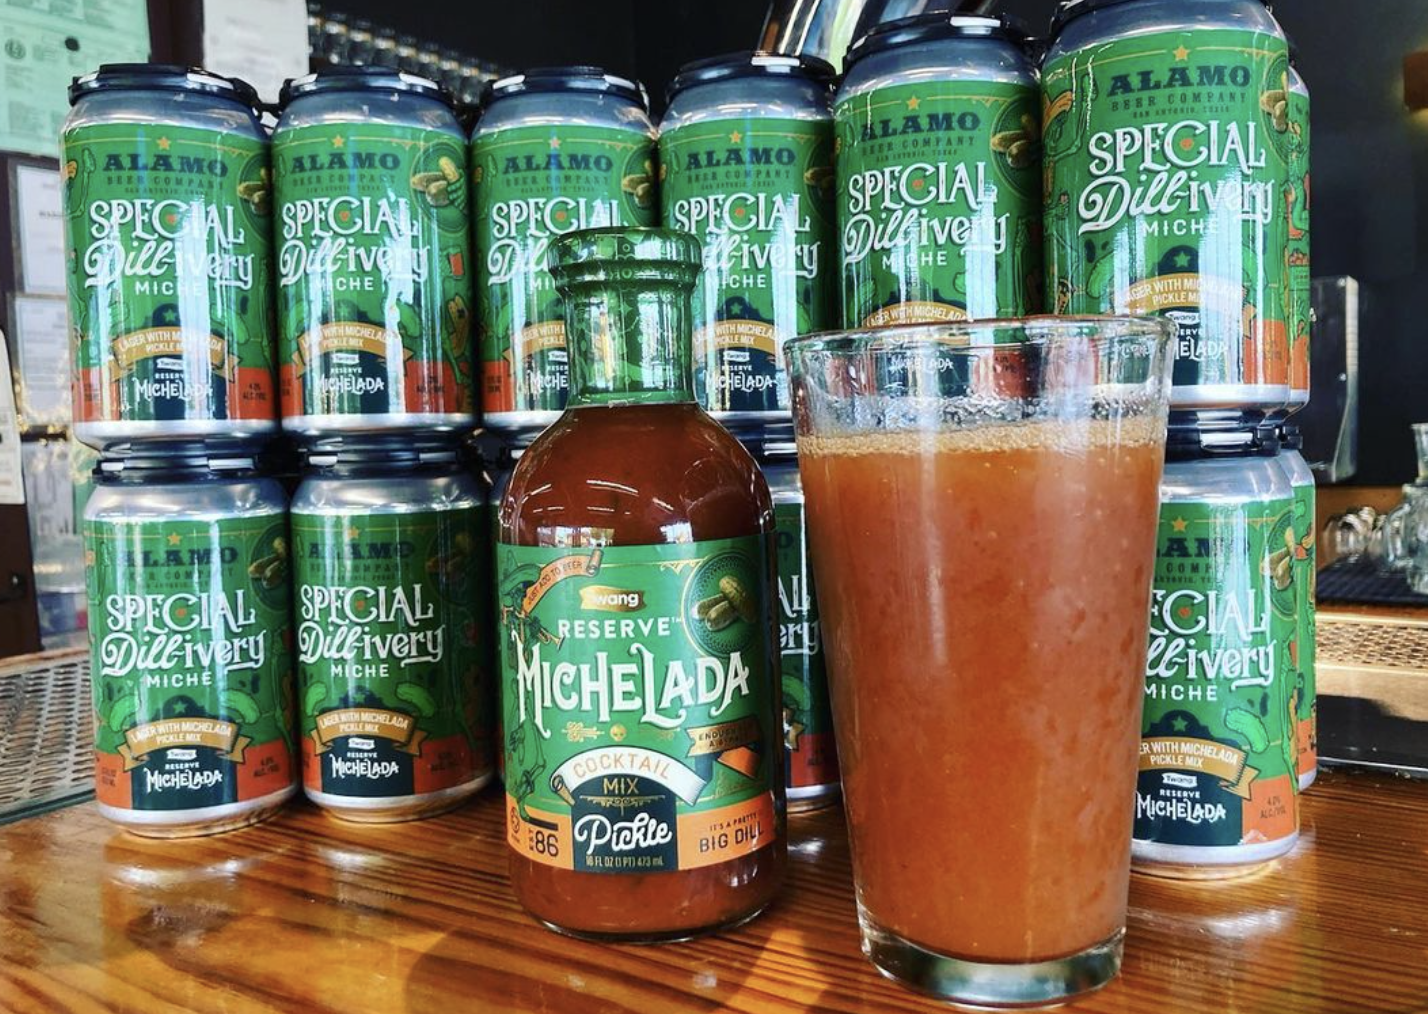 sacurrent.com - Nina Rangel - San Antonio-based Alamo Beer Co. and Twang partner on pickle michelada beer